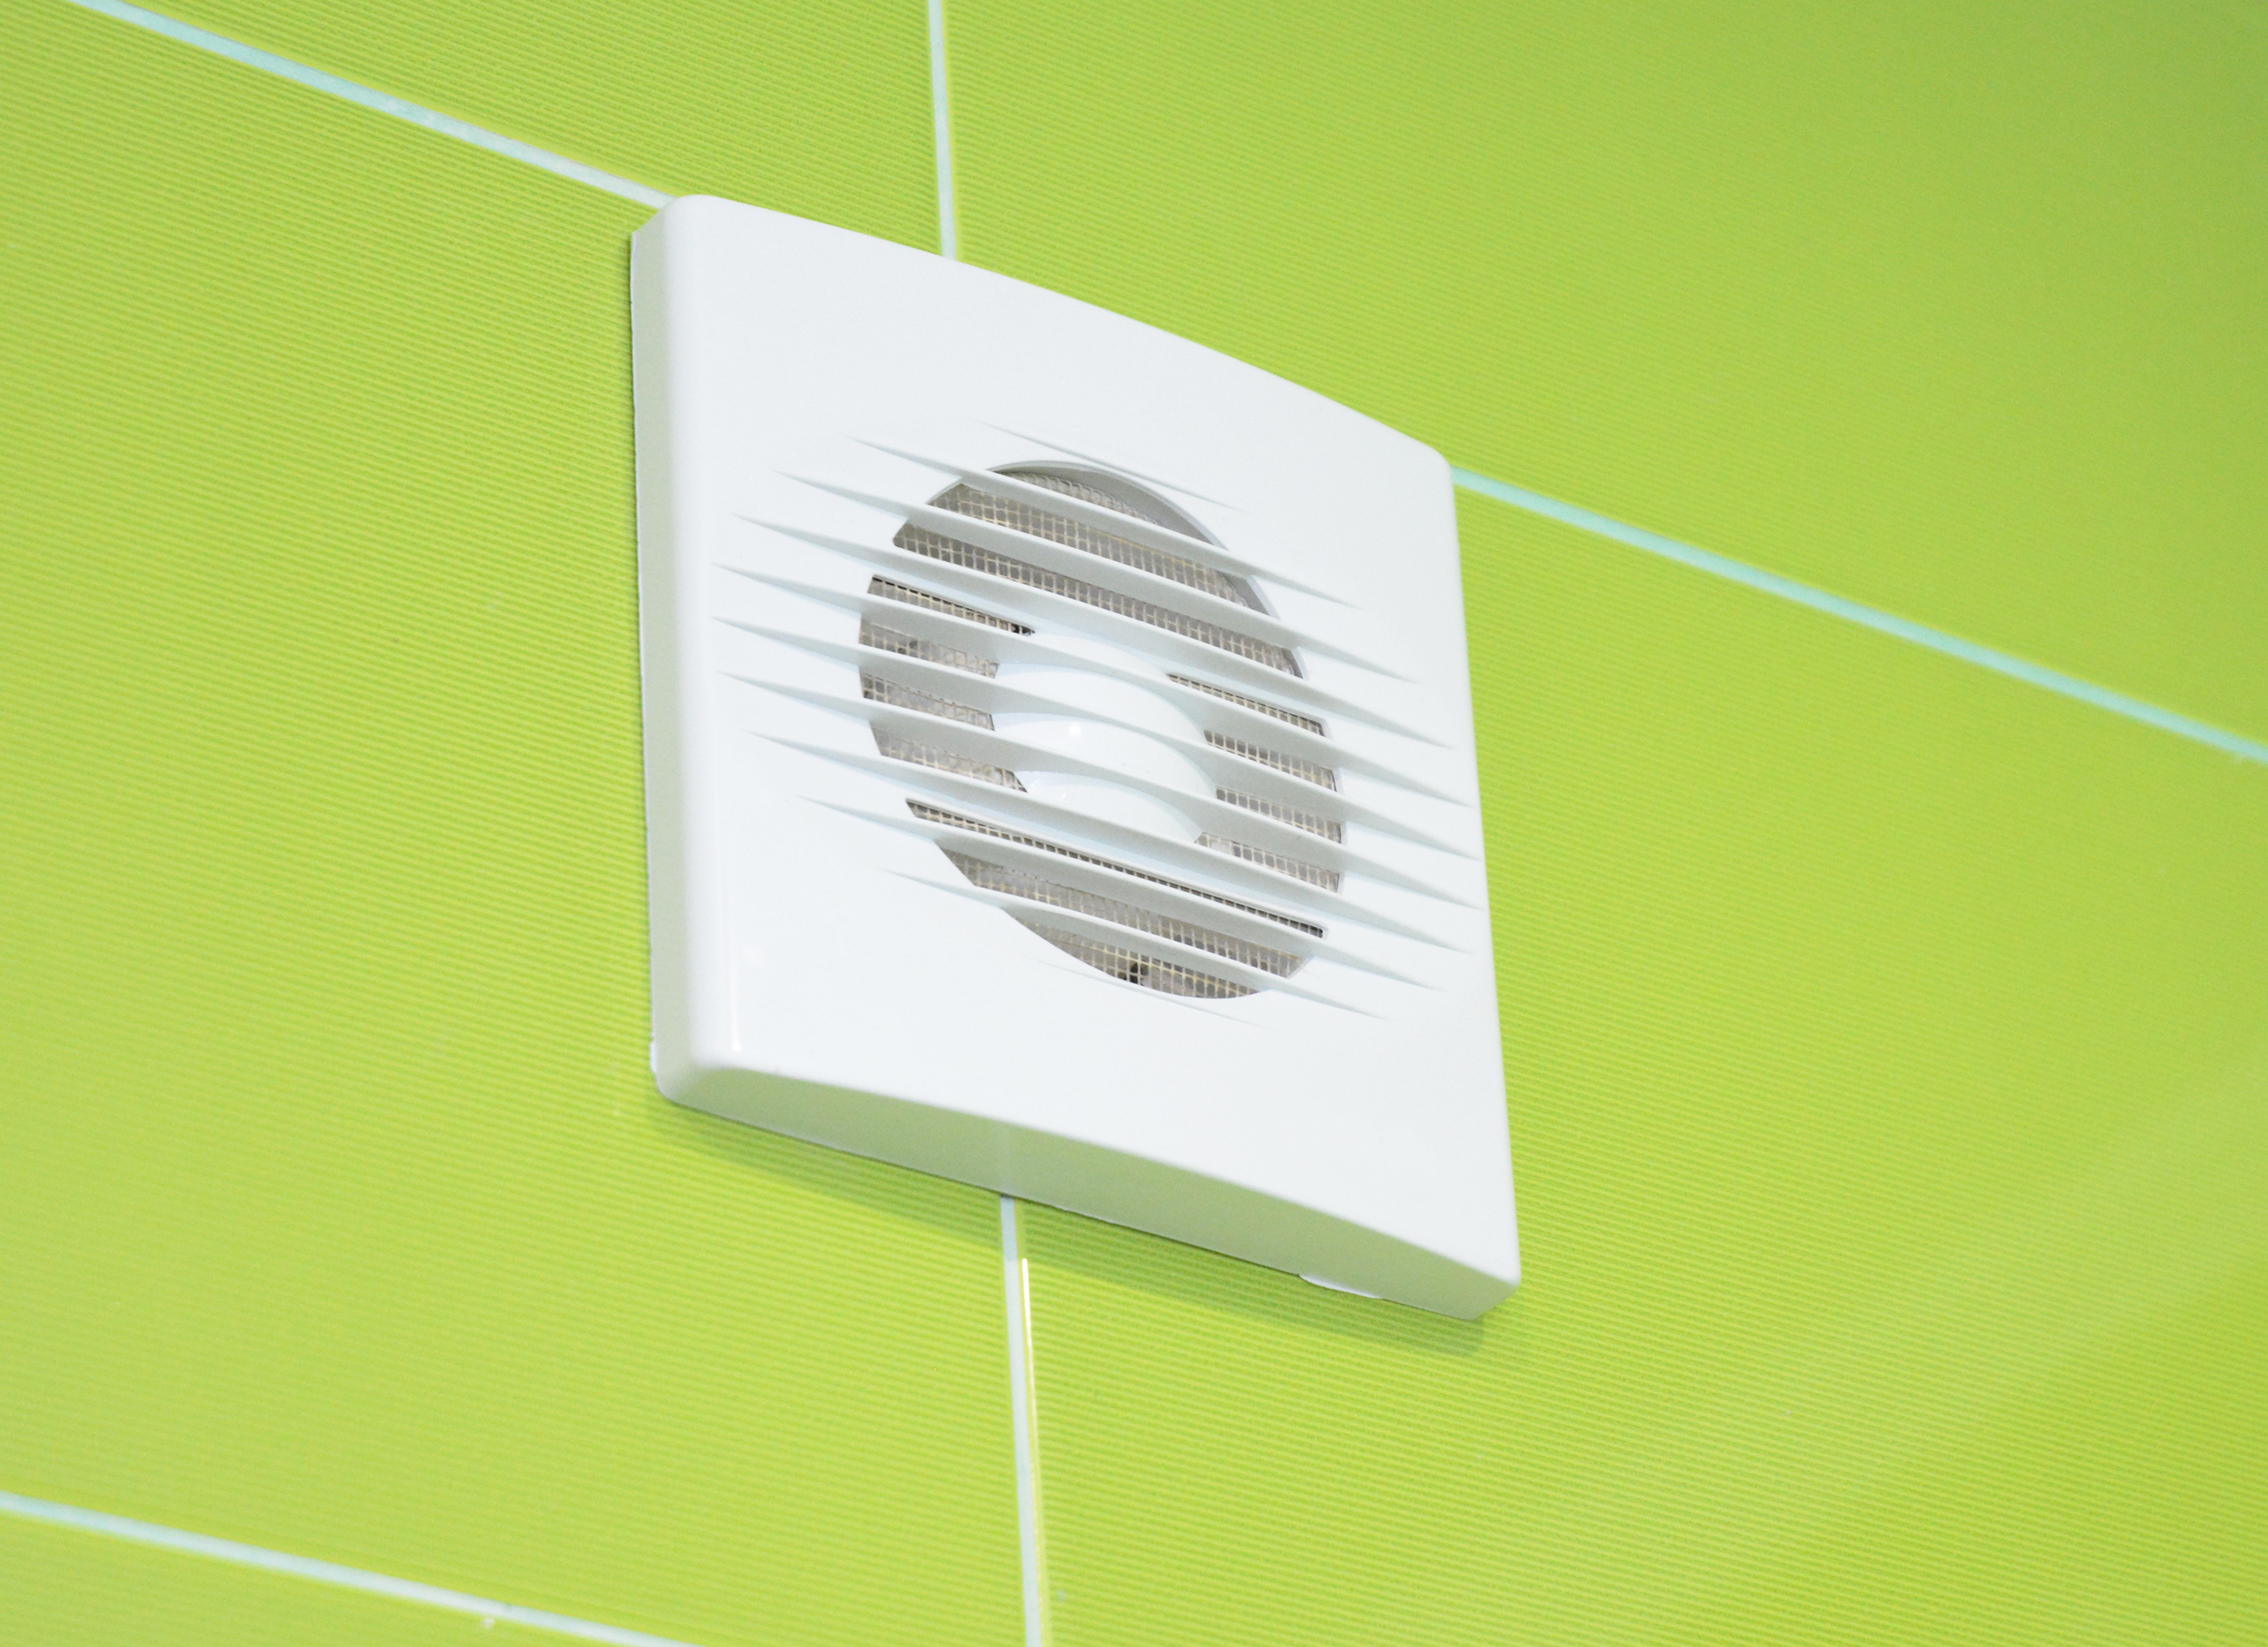 A bathroom vent | Source: Shutterstock